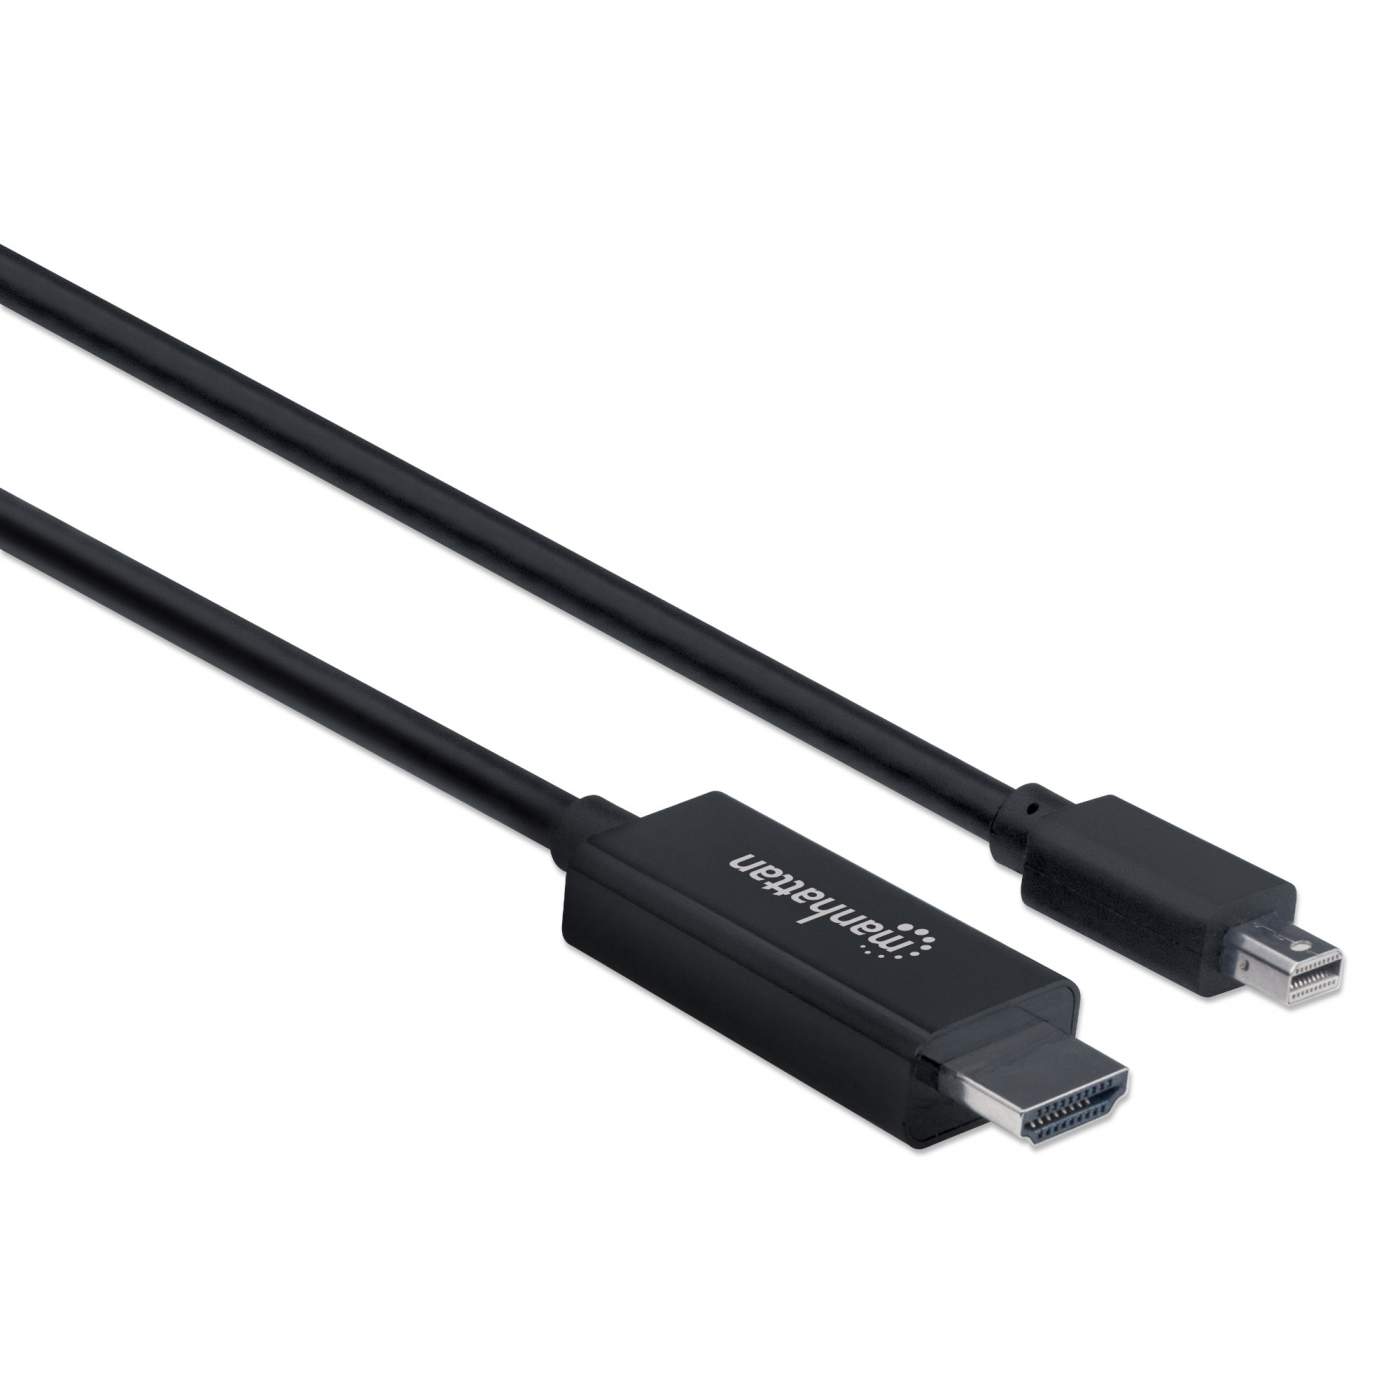 4K@60Hz Mini DisplayPort to HDMI Cable Image 3